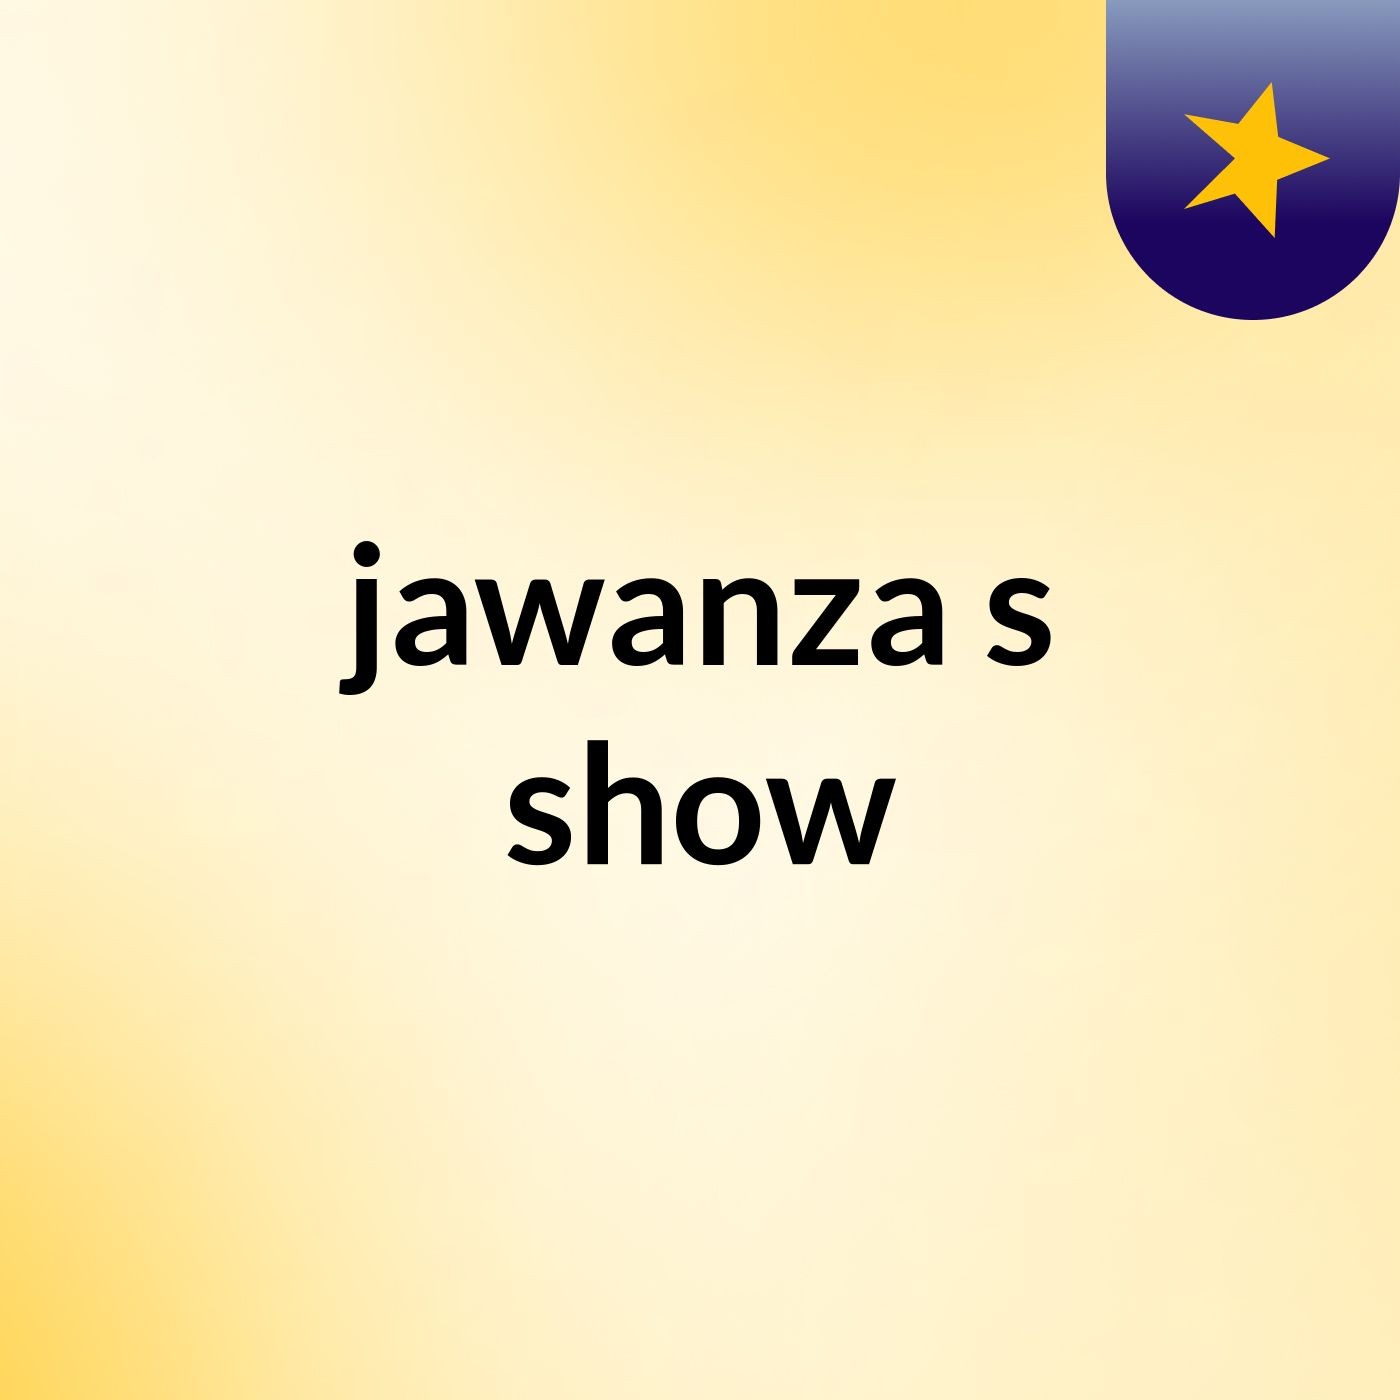 jawanza's show